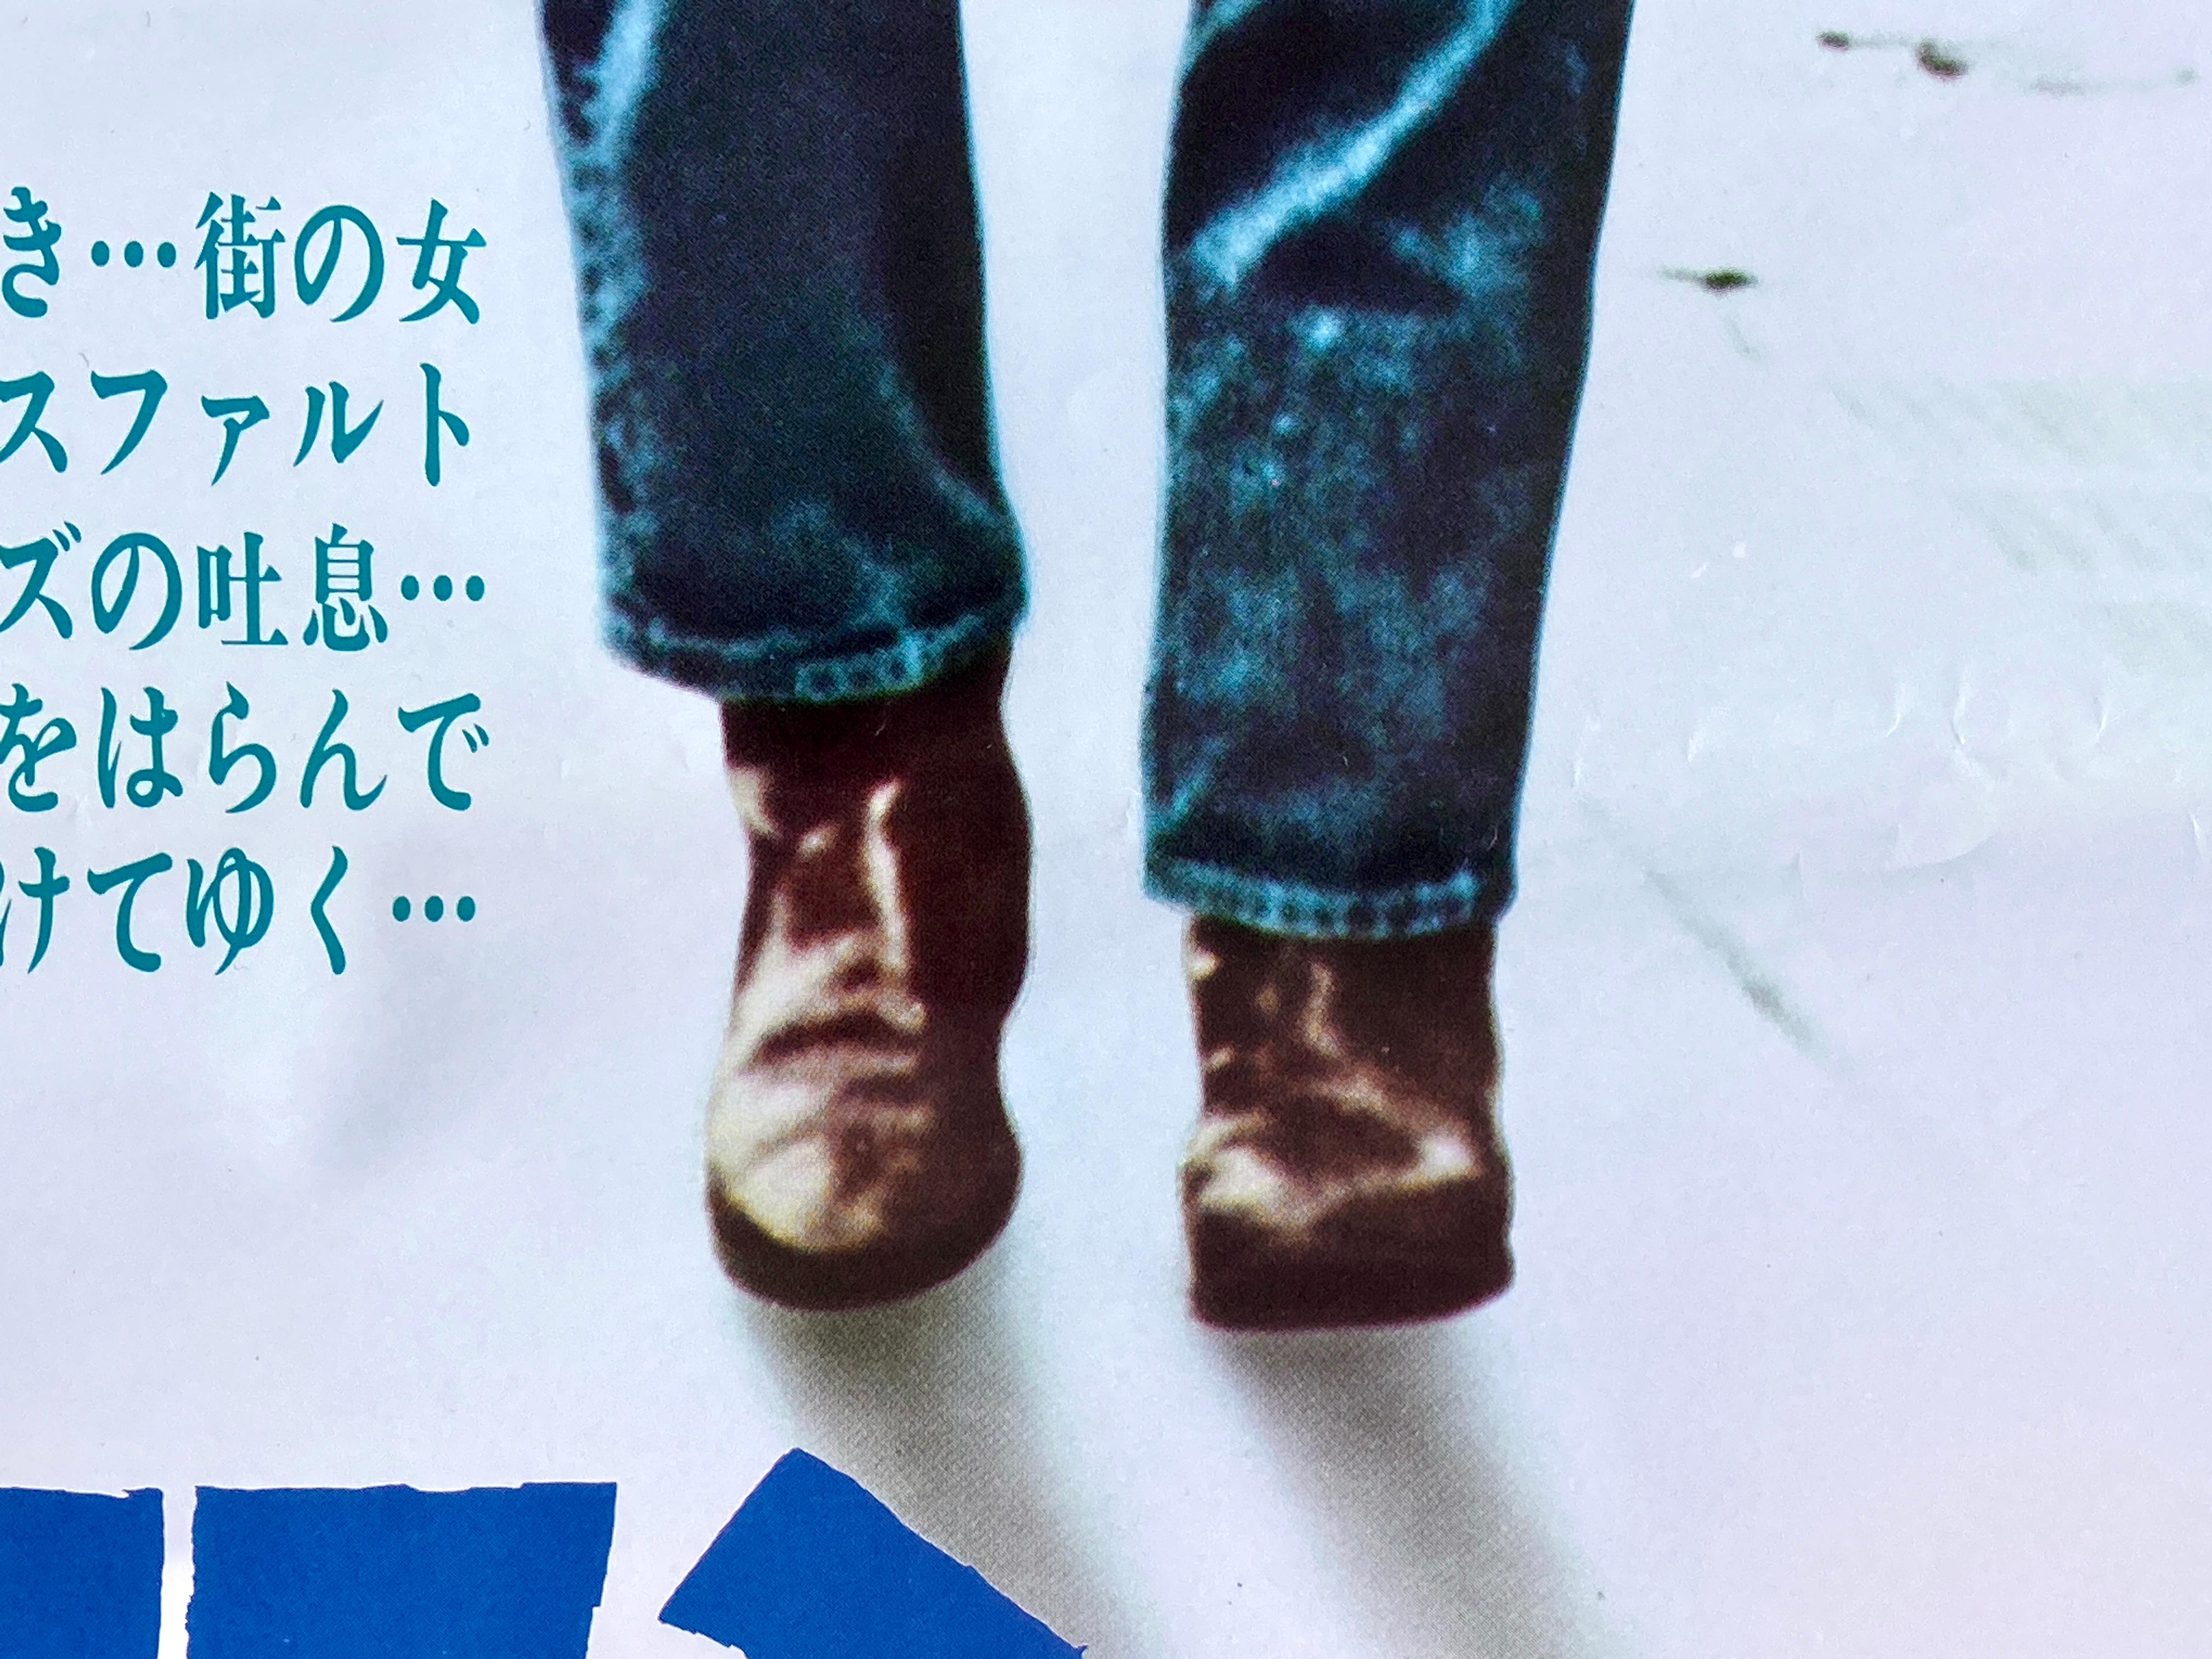 'Taxi Driver' Original Vintage Movie Poster, Japanese, 1976 1